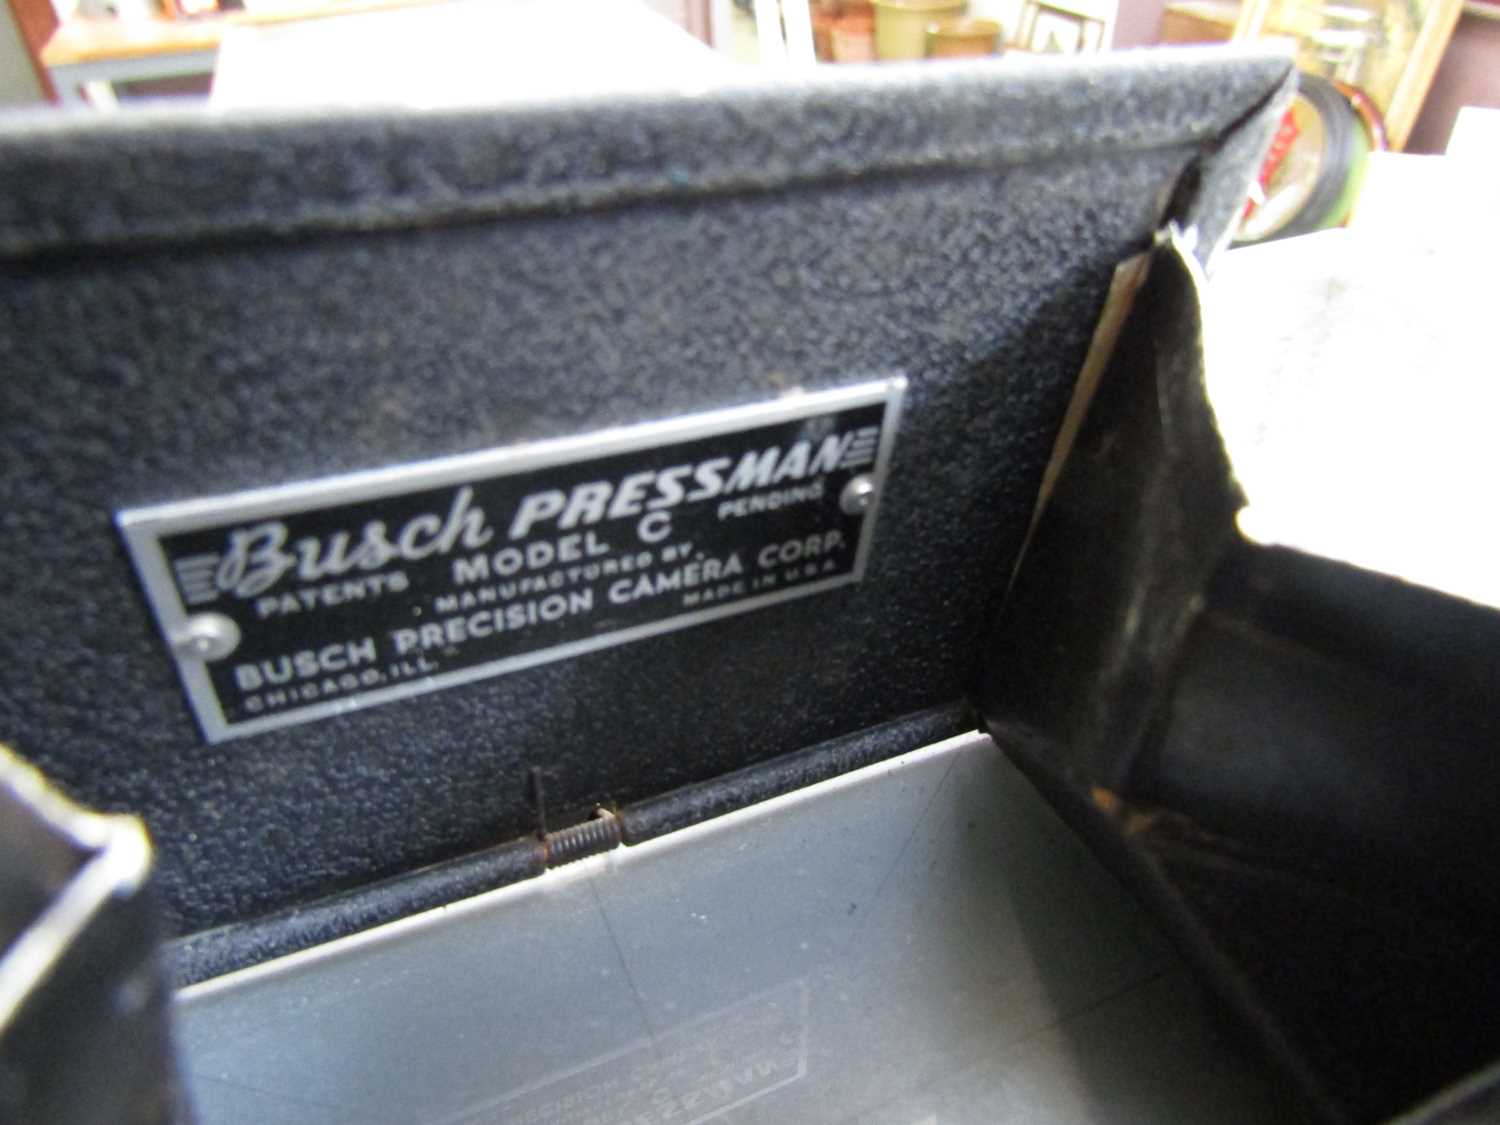 A Thornton's Pickard Junior Special Quarter Plate camera together with a Busch press camera - Image 7 of 7